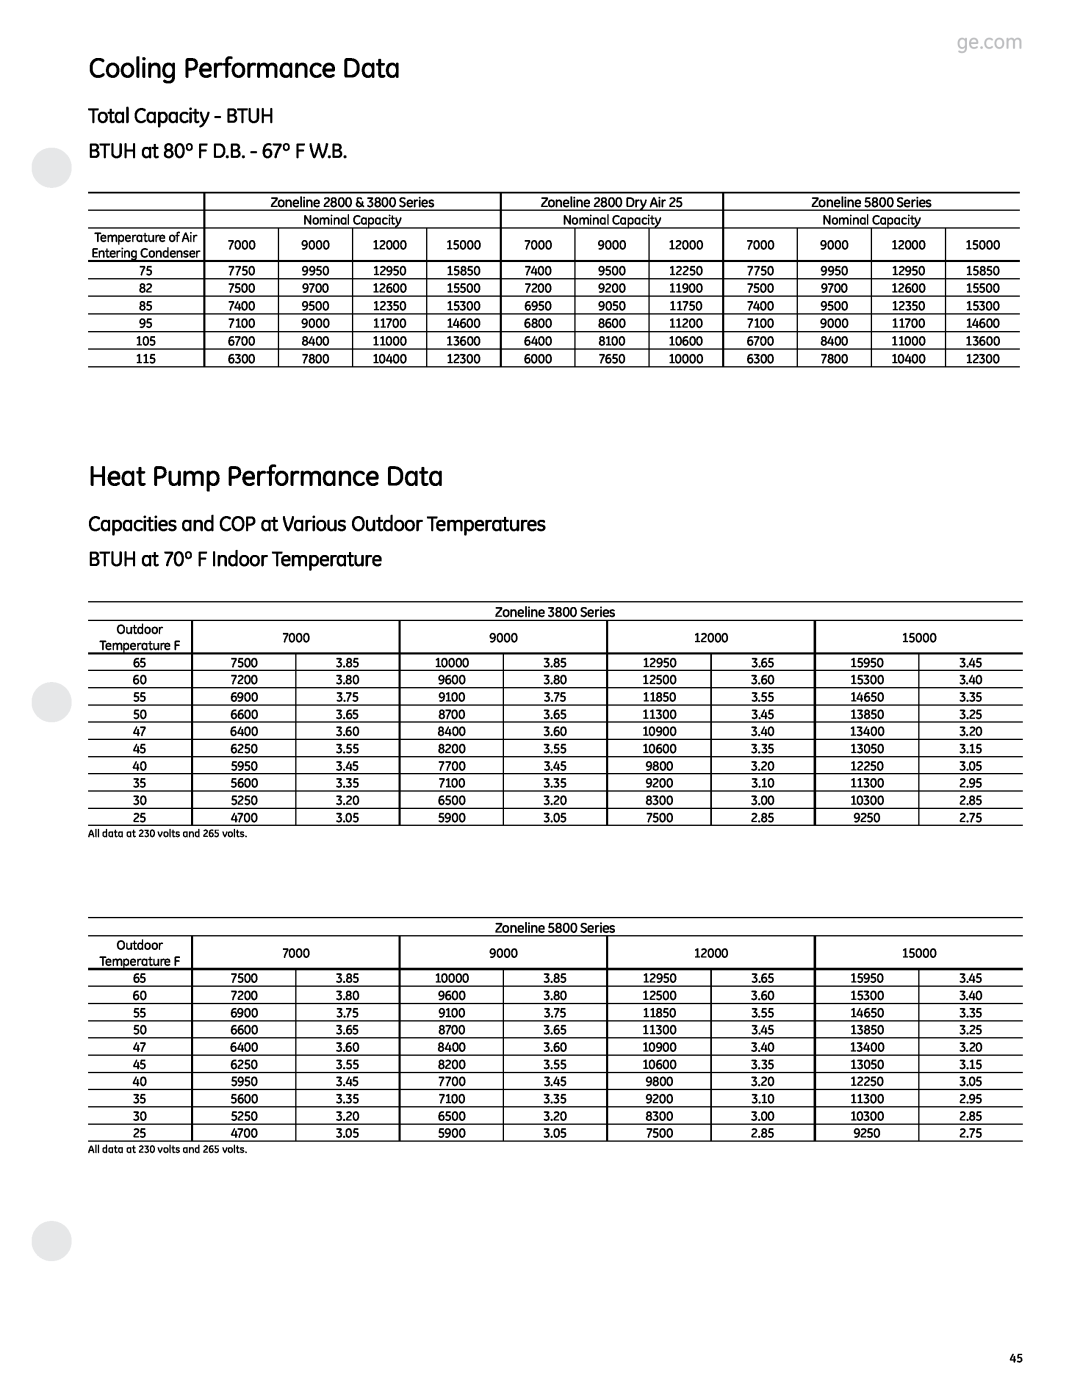 GE 2800 manual Cooling Performance Data, Heat Pump Performance Data, Total Capacity - BTUH, BTUH at 80º F D.B. - 67º F W.B 